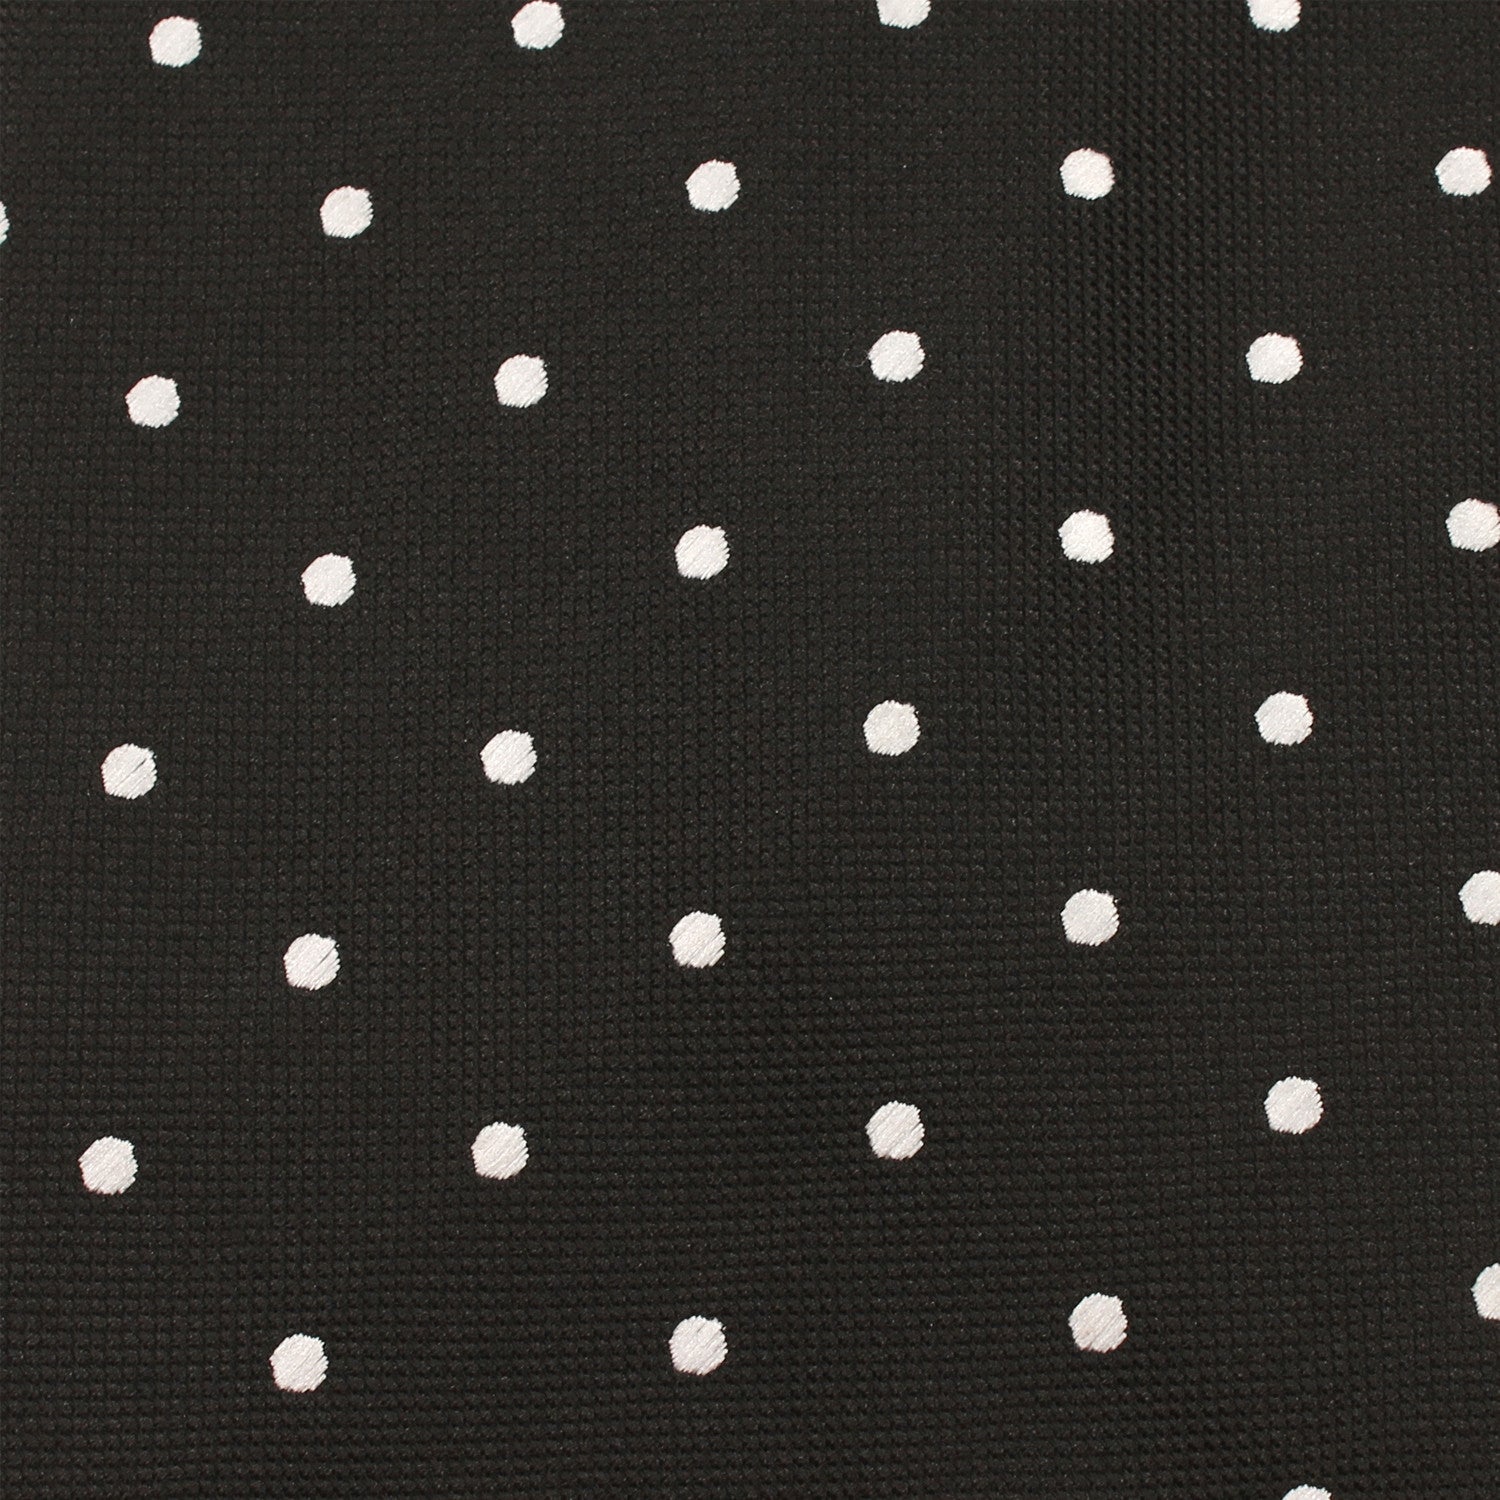 Coal Black with White Polka Dots Necktie Fabric